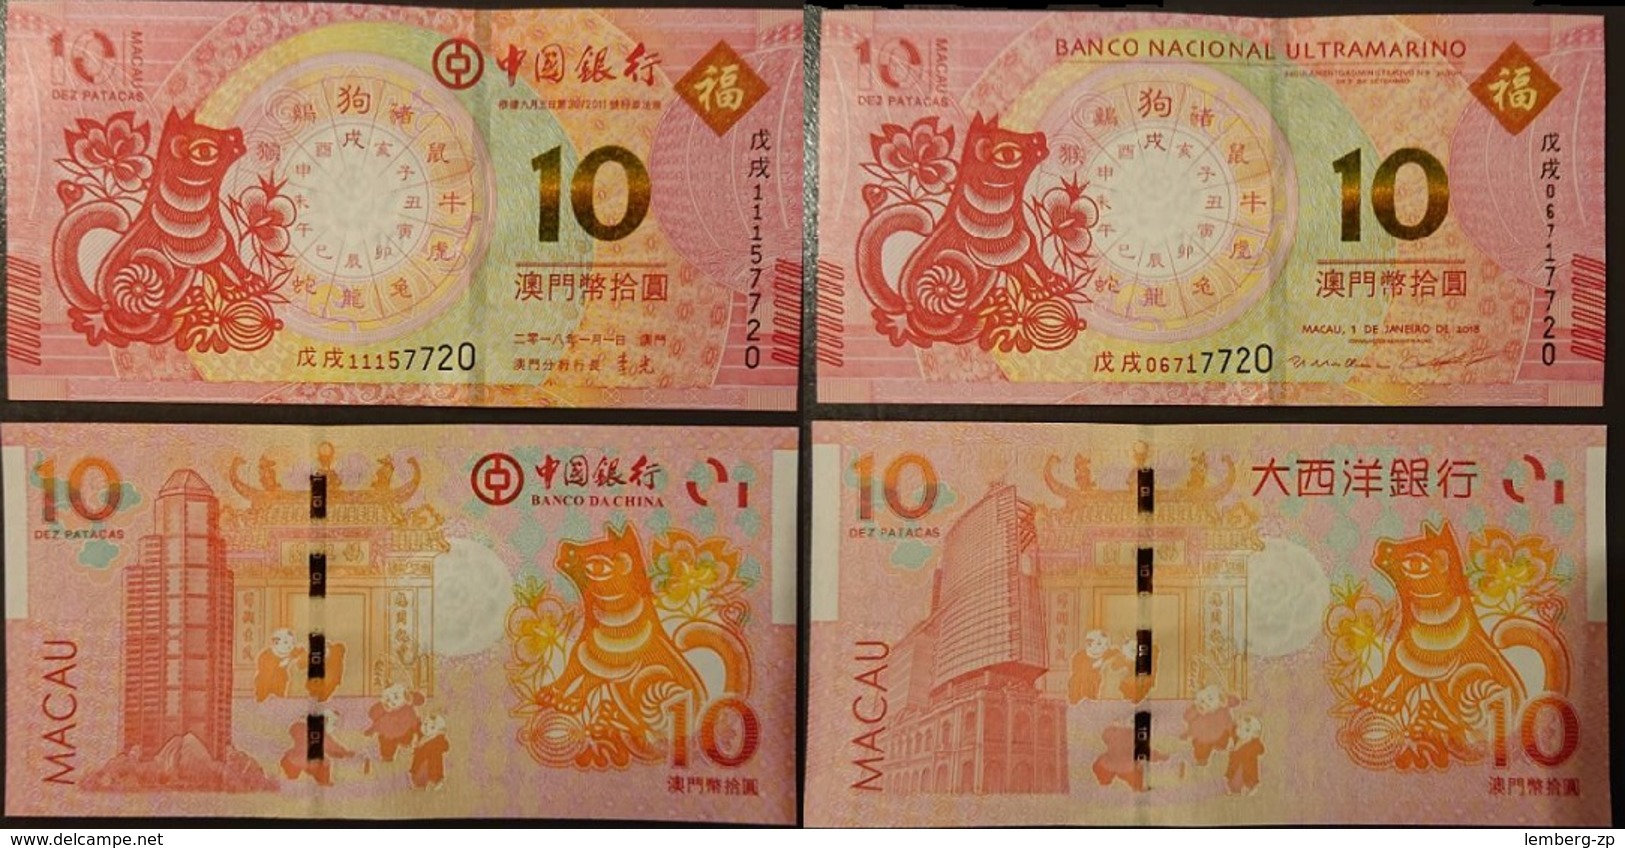 Macao Macau - Set 2 Banknotes 10 Patacas Comm. BNU + BOC Dog 2018 Lemberg-Zp - Macao